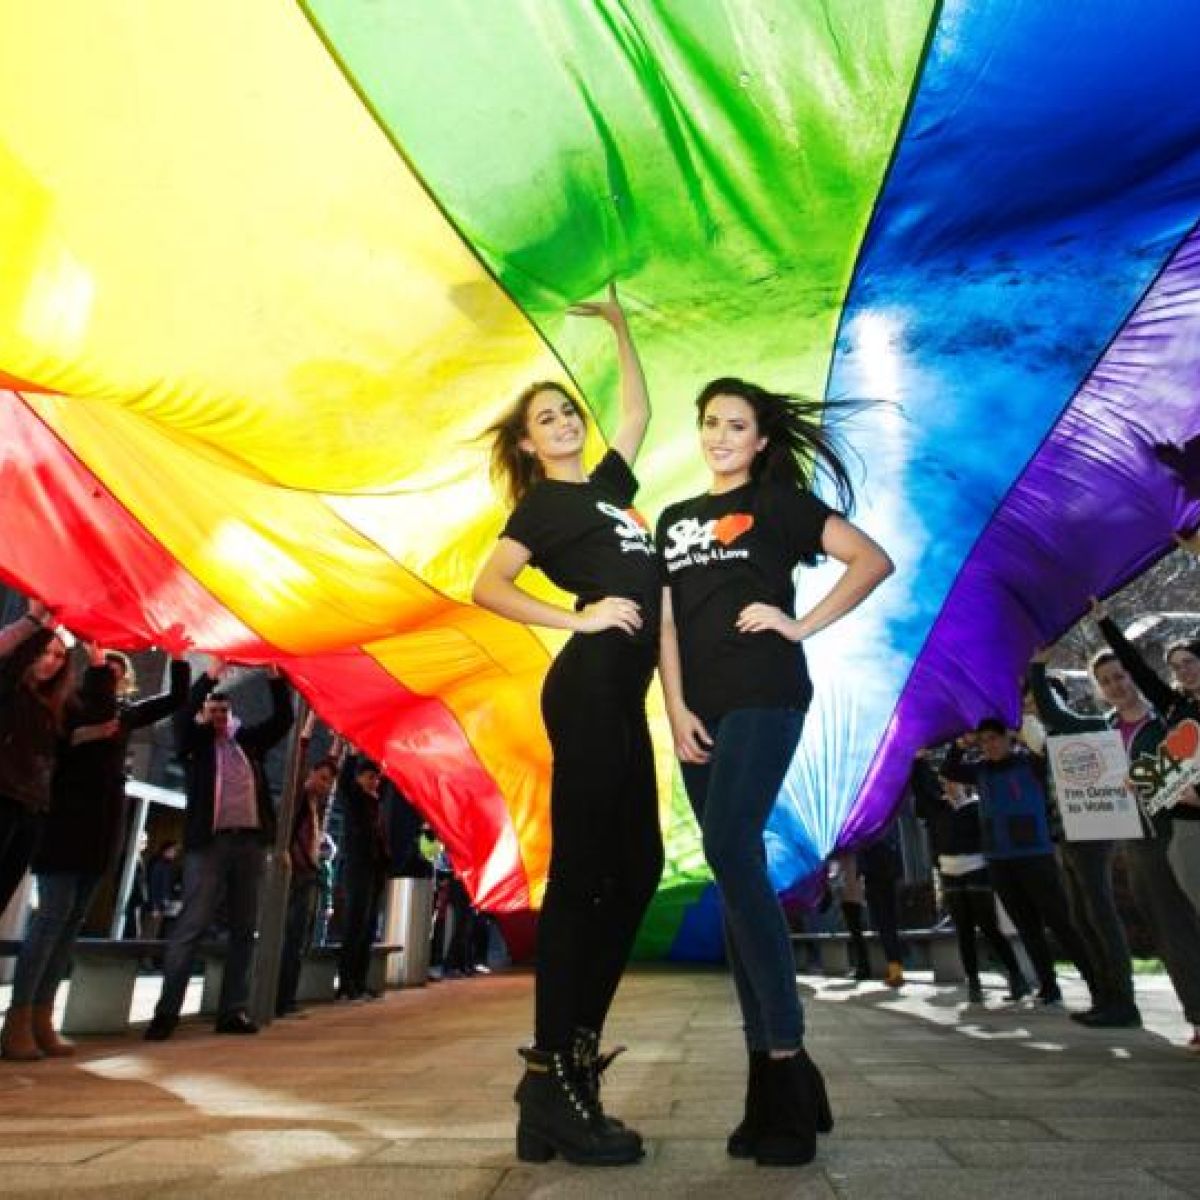 Lesbian dating Ireland: Meet your match today | EliteSingles